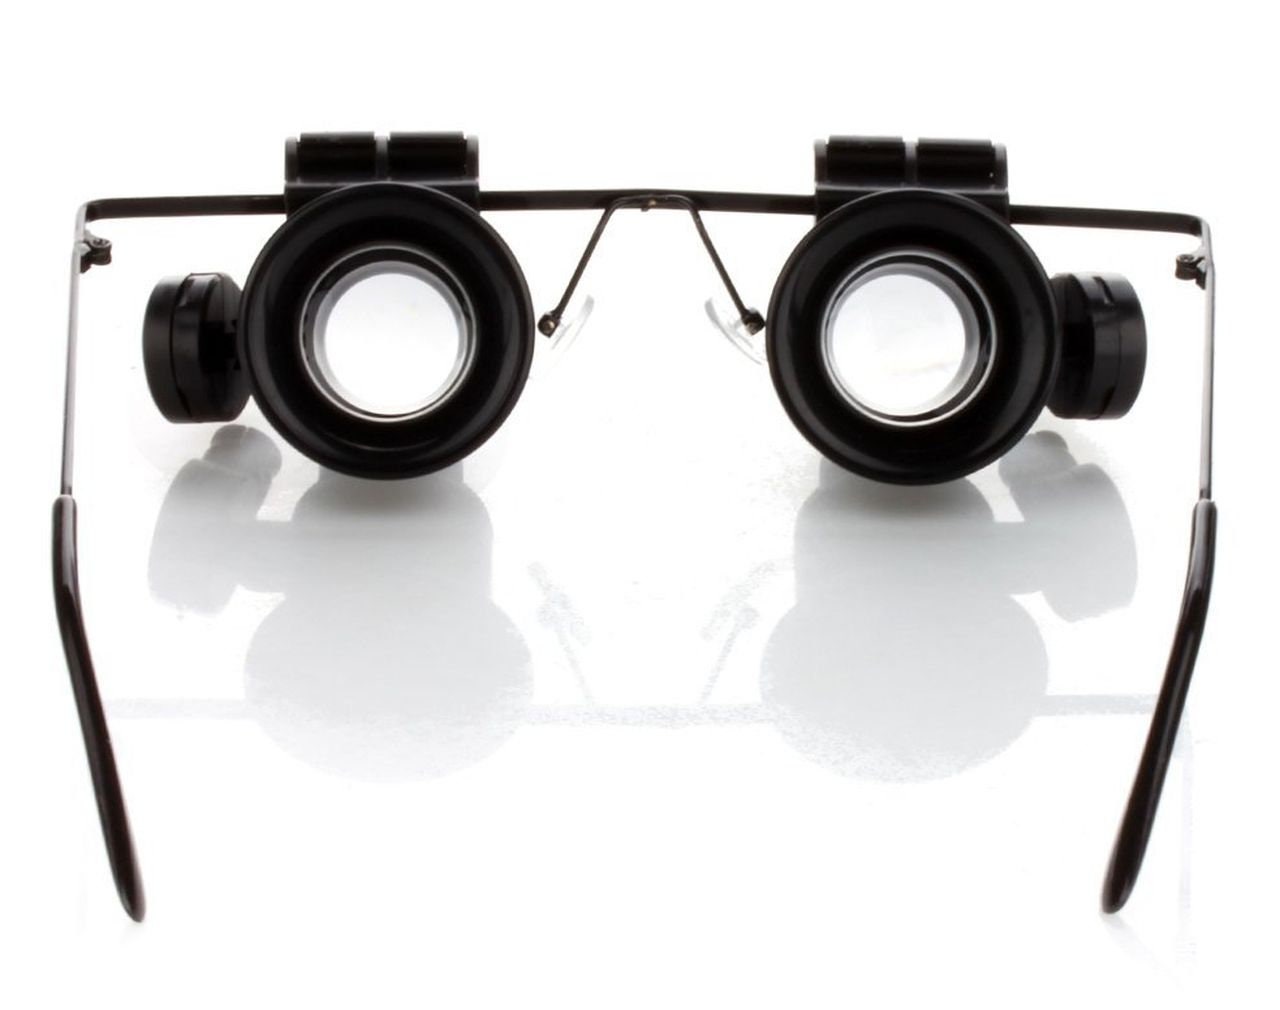 Mgaxyff 20X Magnification Single Eyeglass Magnifying Jeweler Watch Repair  LED Light Magnifier, Lens Glasses Magnifier, Magnifying Eye Glasses